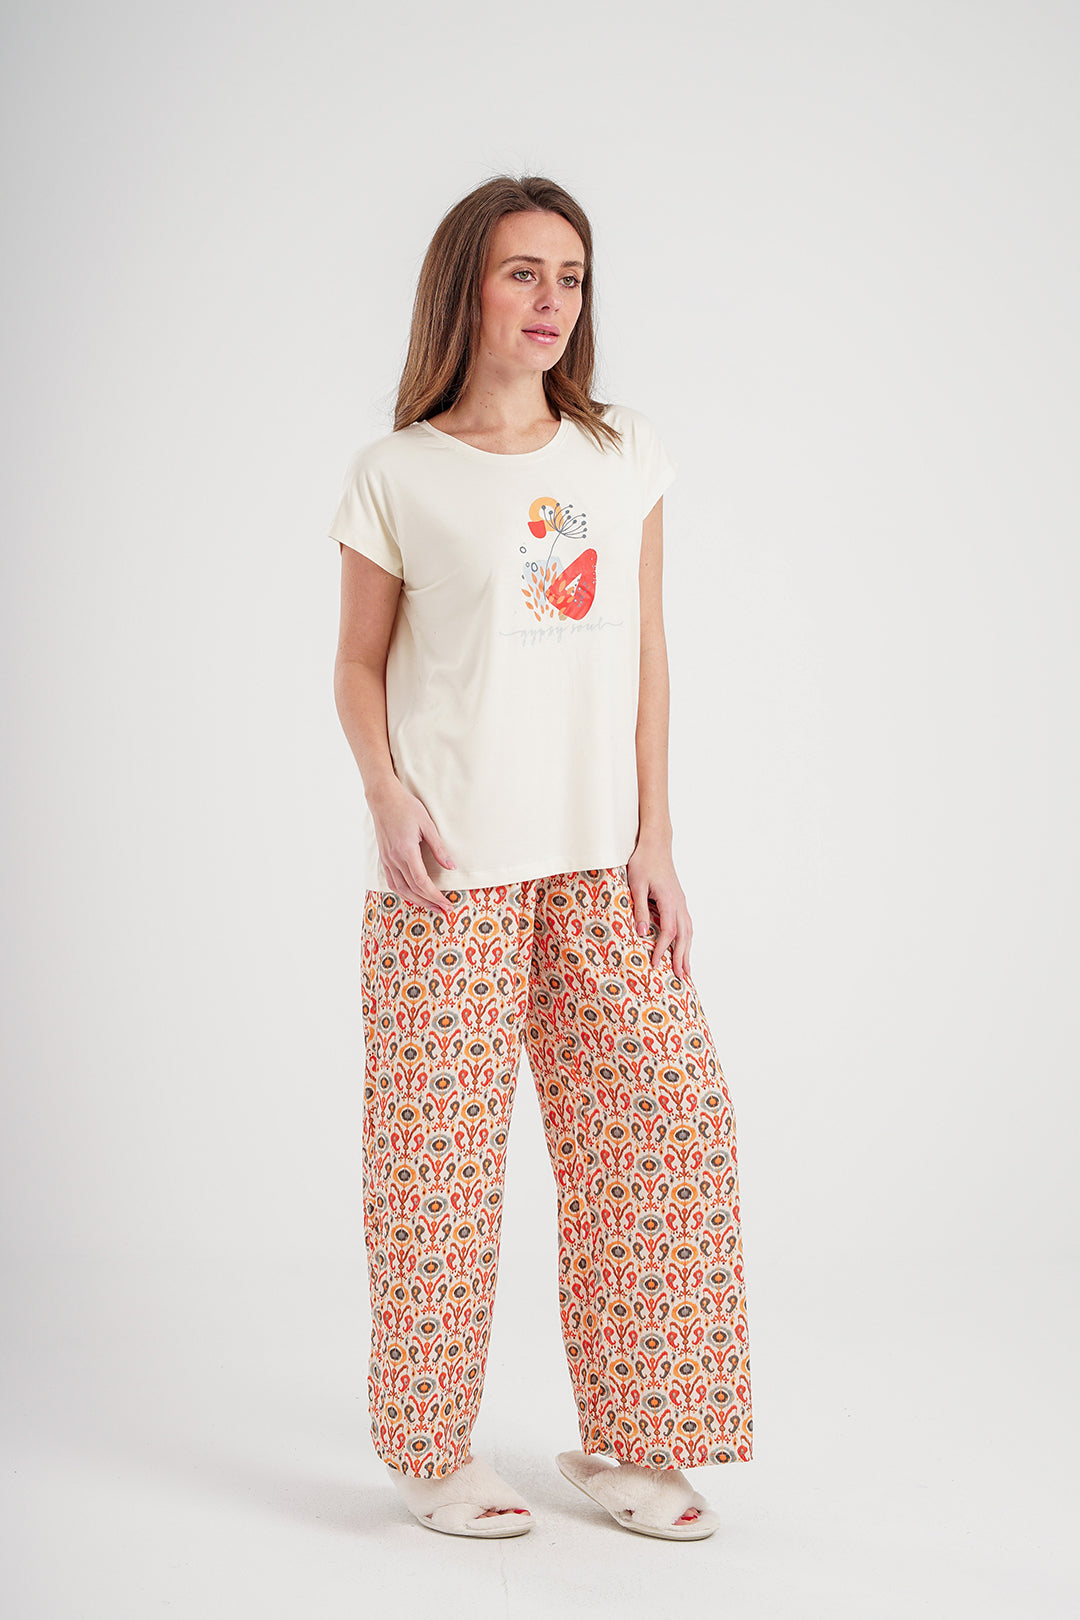 Gypsy Soul Women's Pajama Pants Printed Viscose